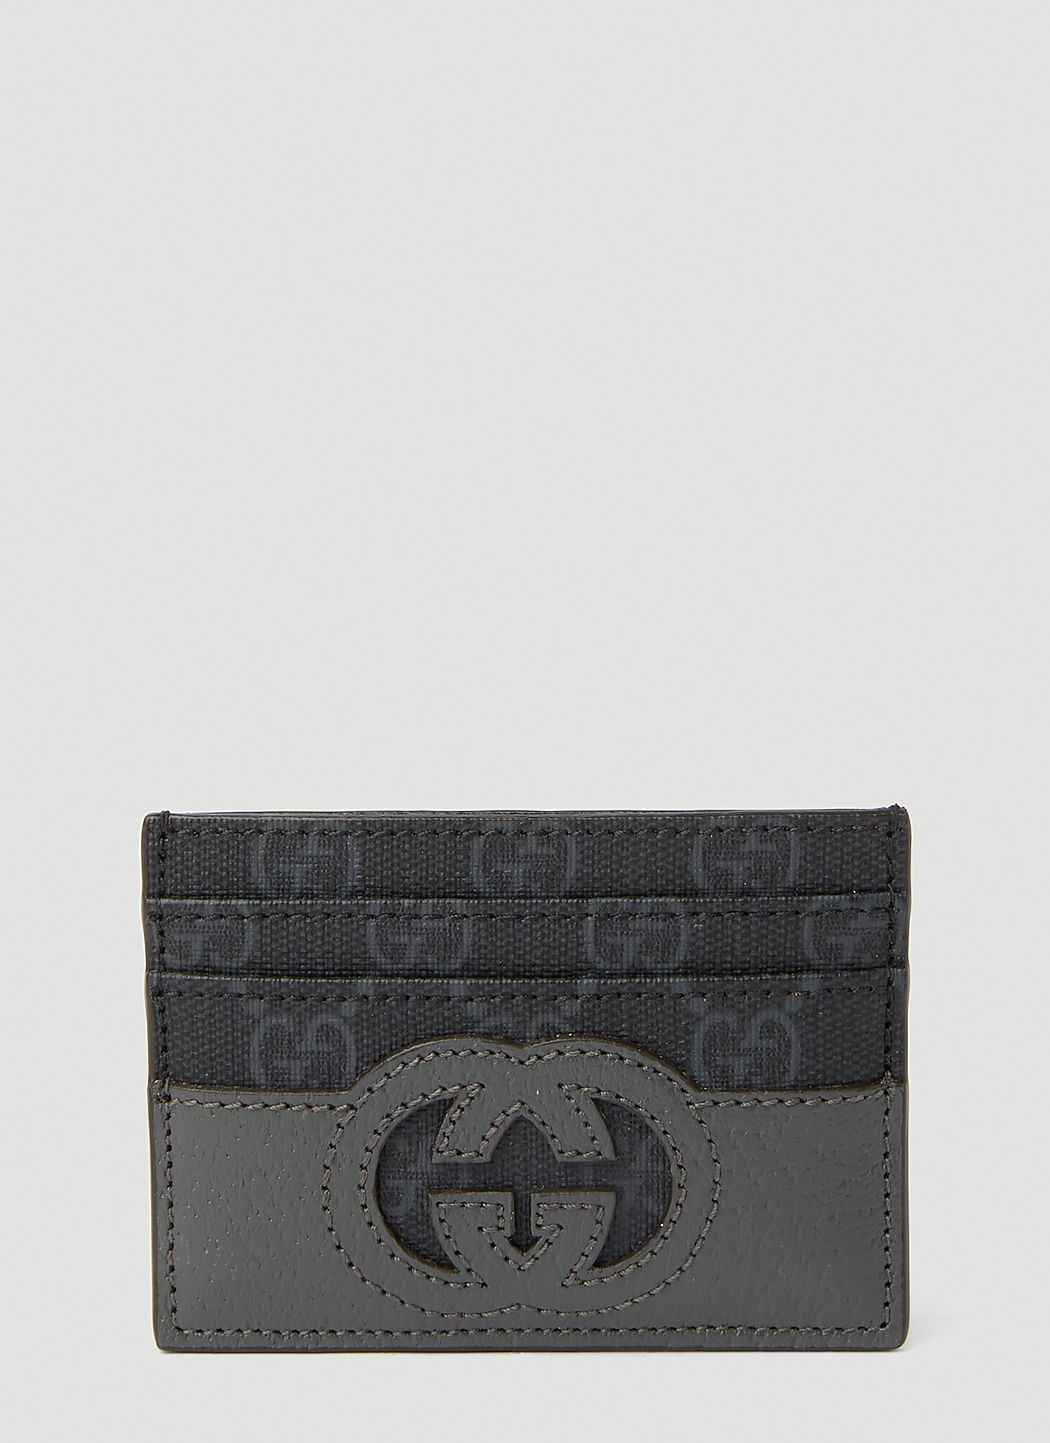 Gucci Beige GG Supreme Canvas and Leather Kingsnake Card Holder Lanyard